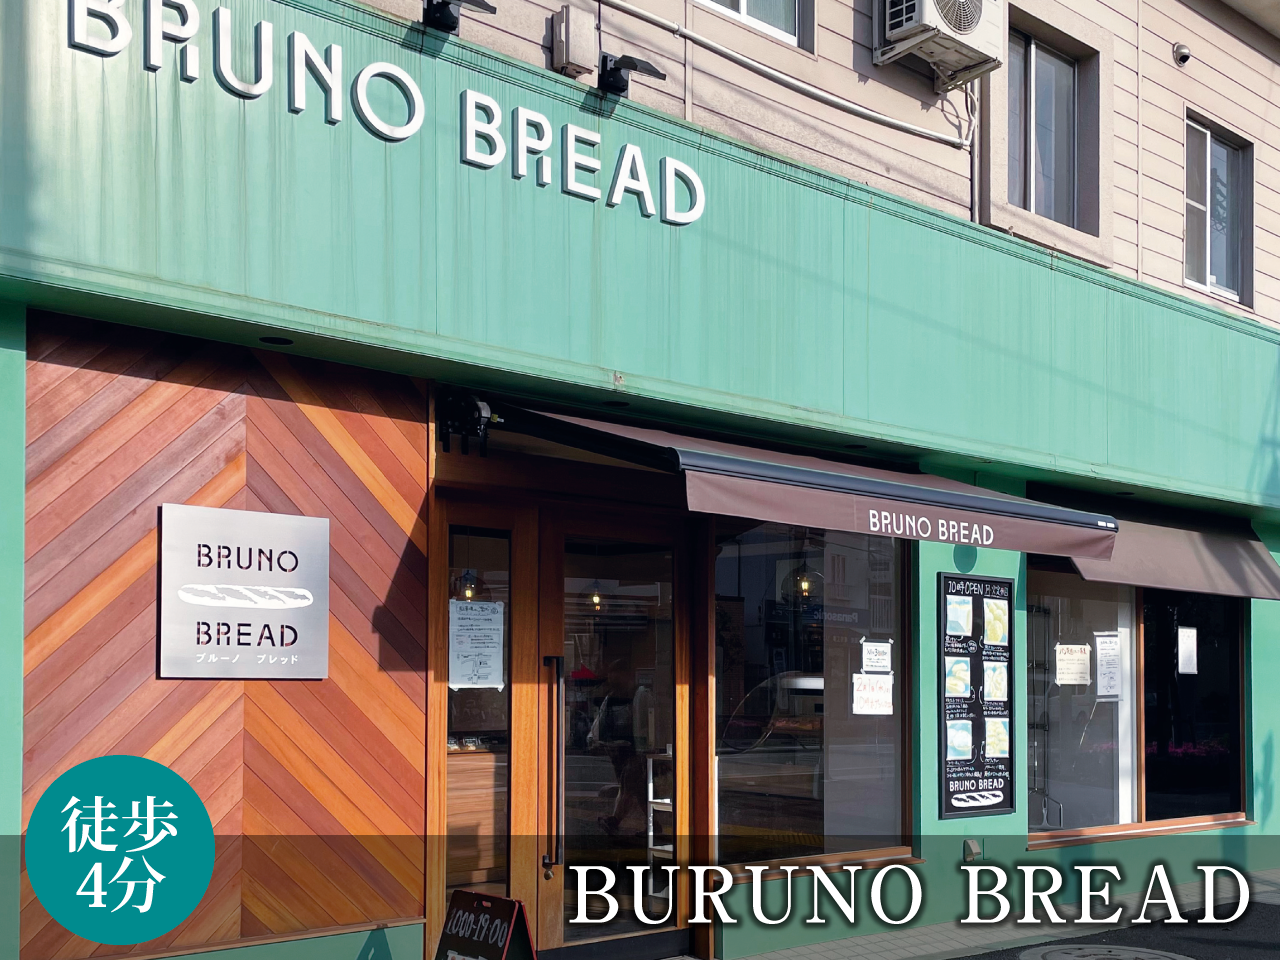 BURUNO BREAD